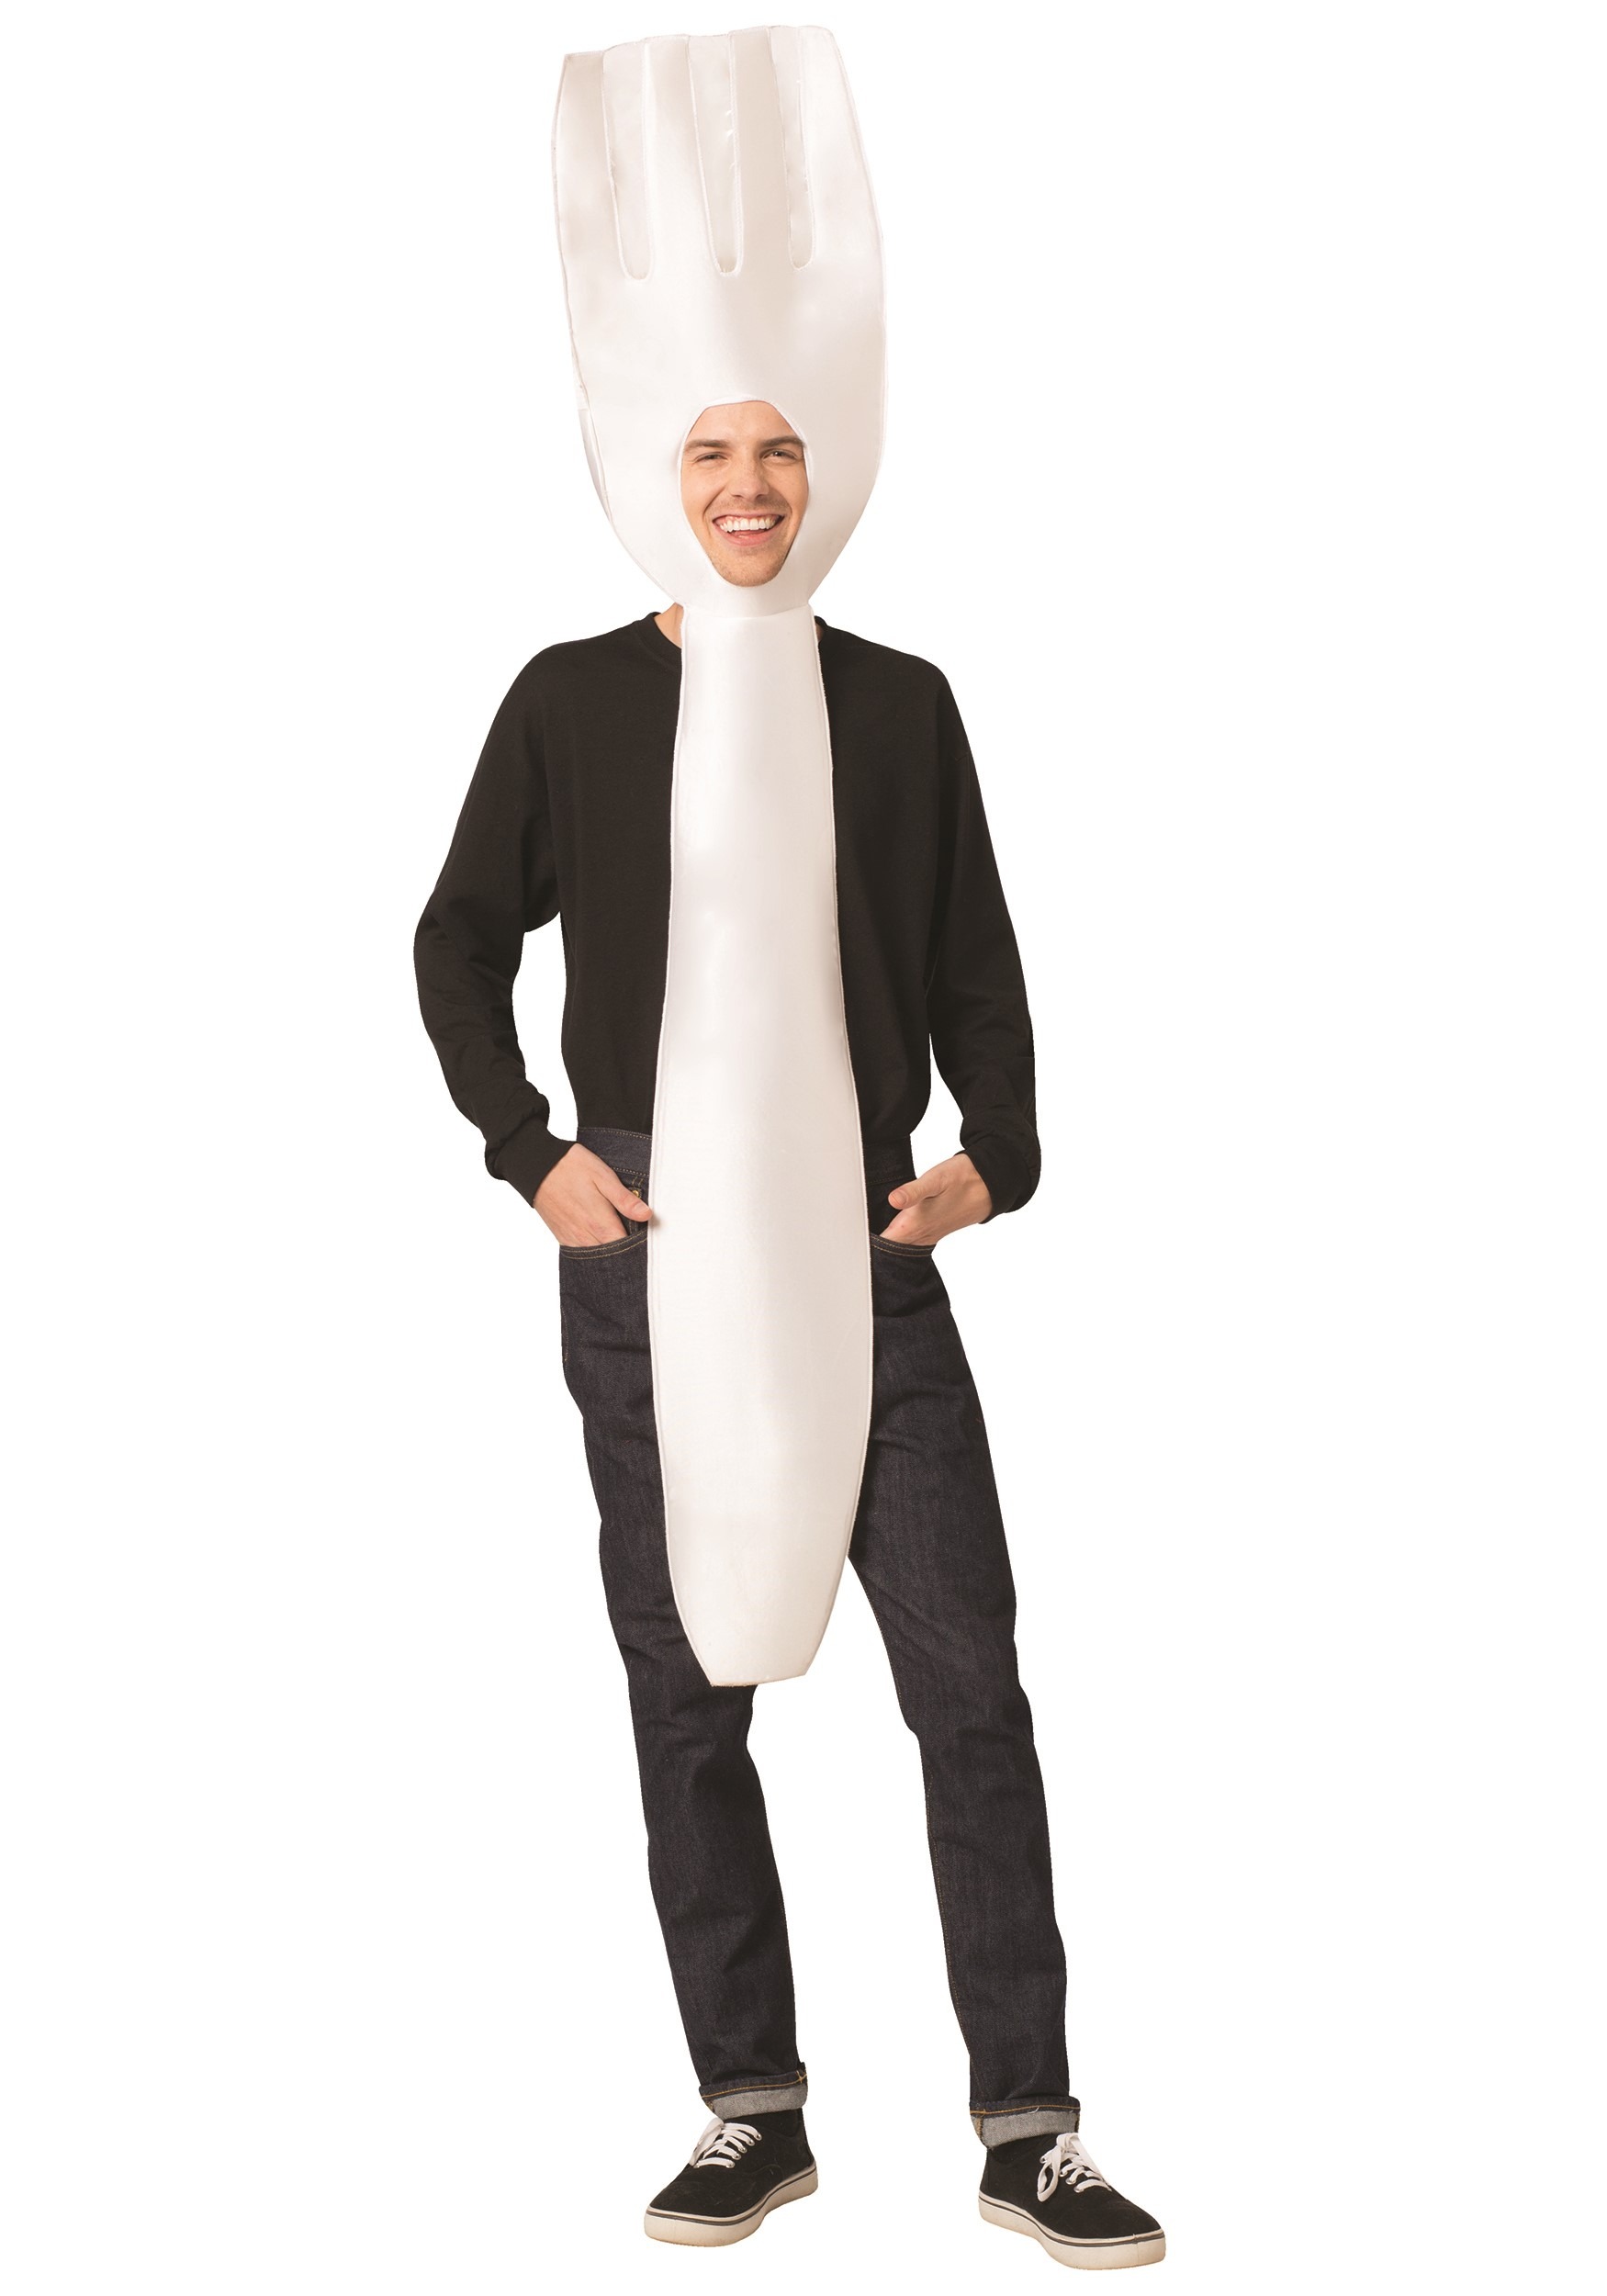 The Adult Plastic Fork Costume